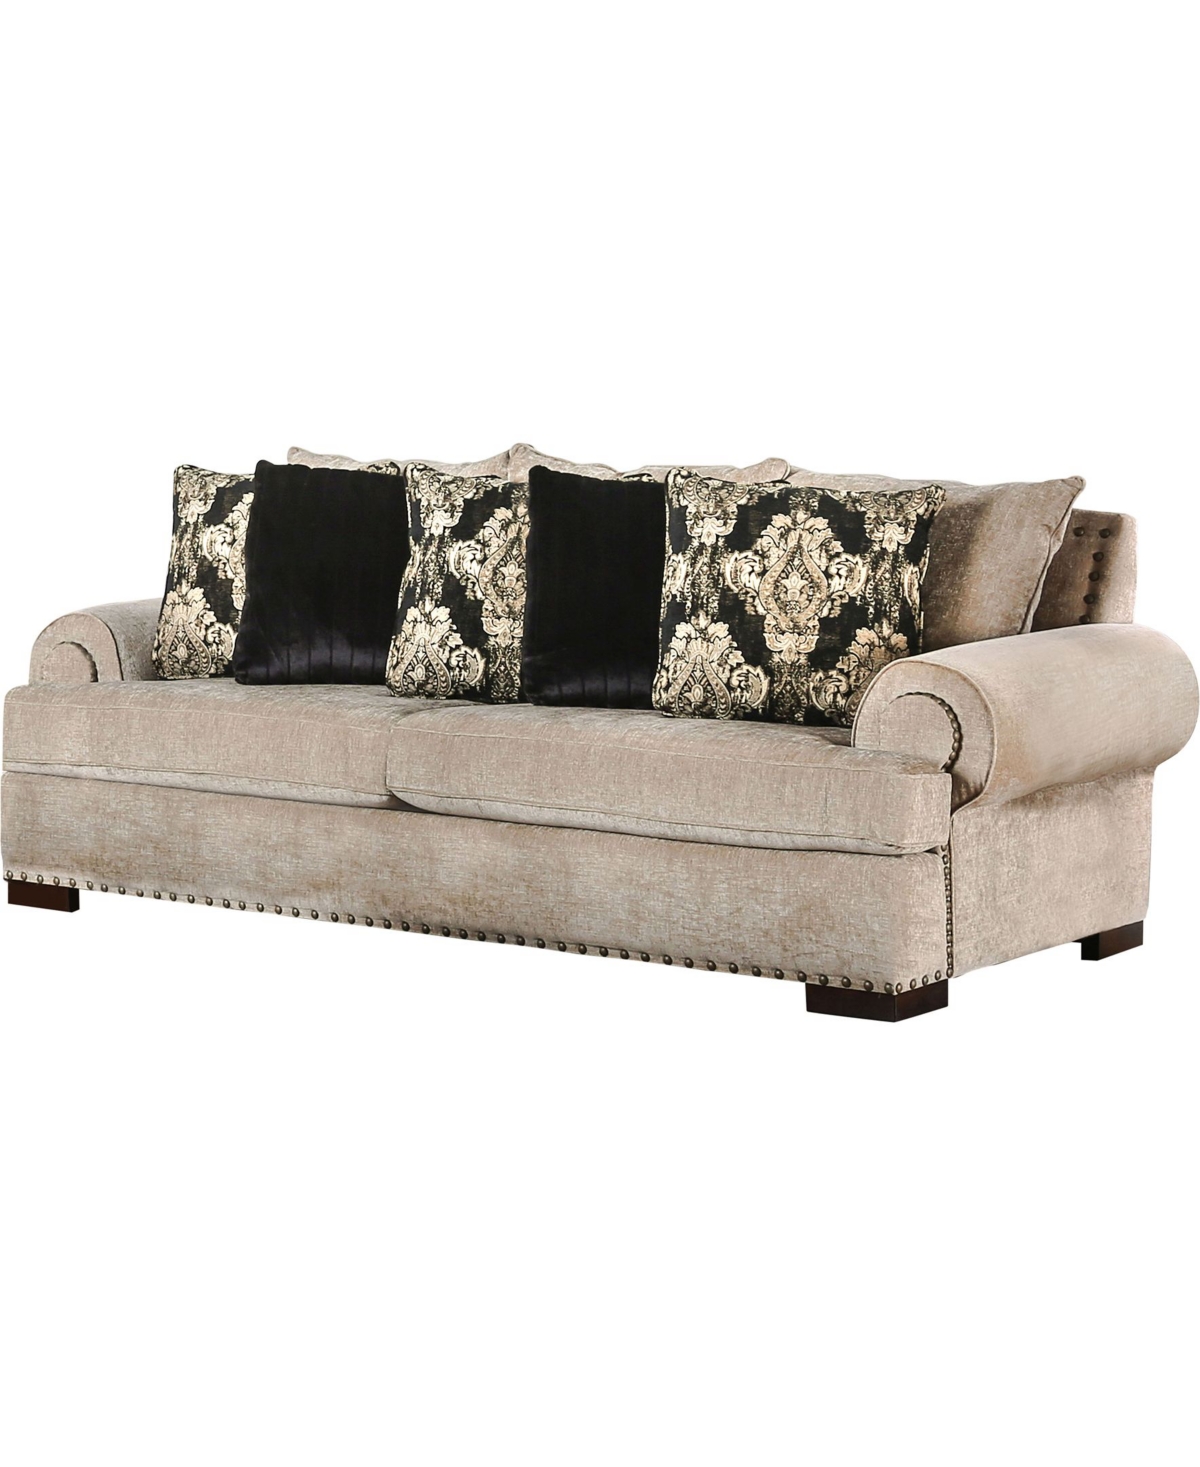 of America Florin Upholstered Sofa